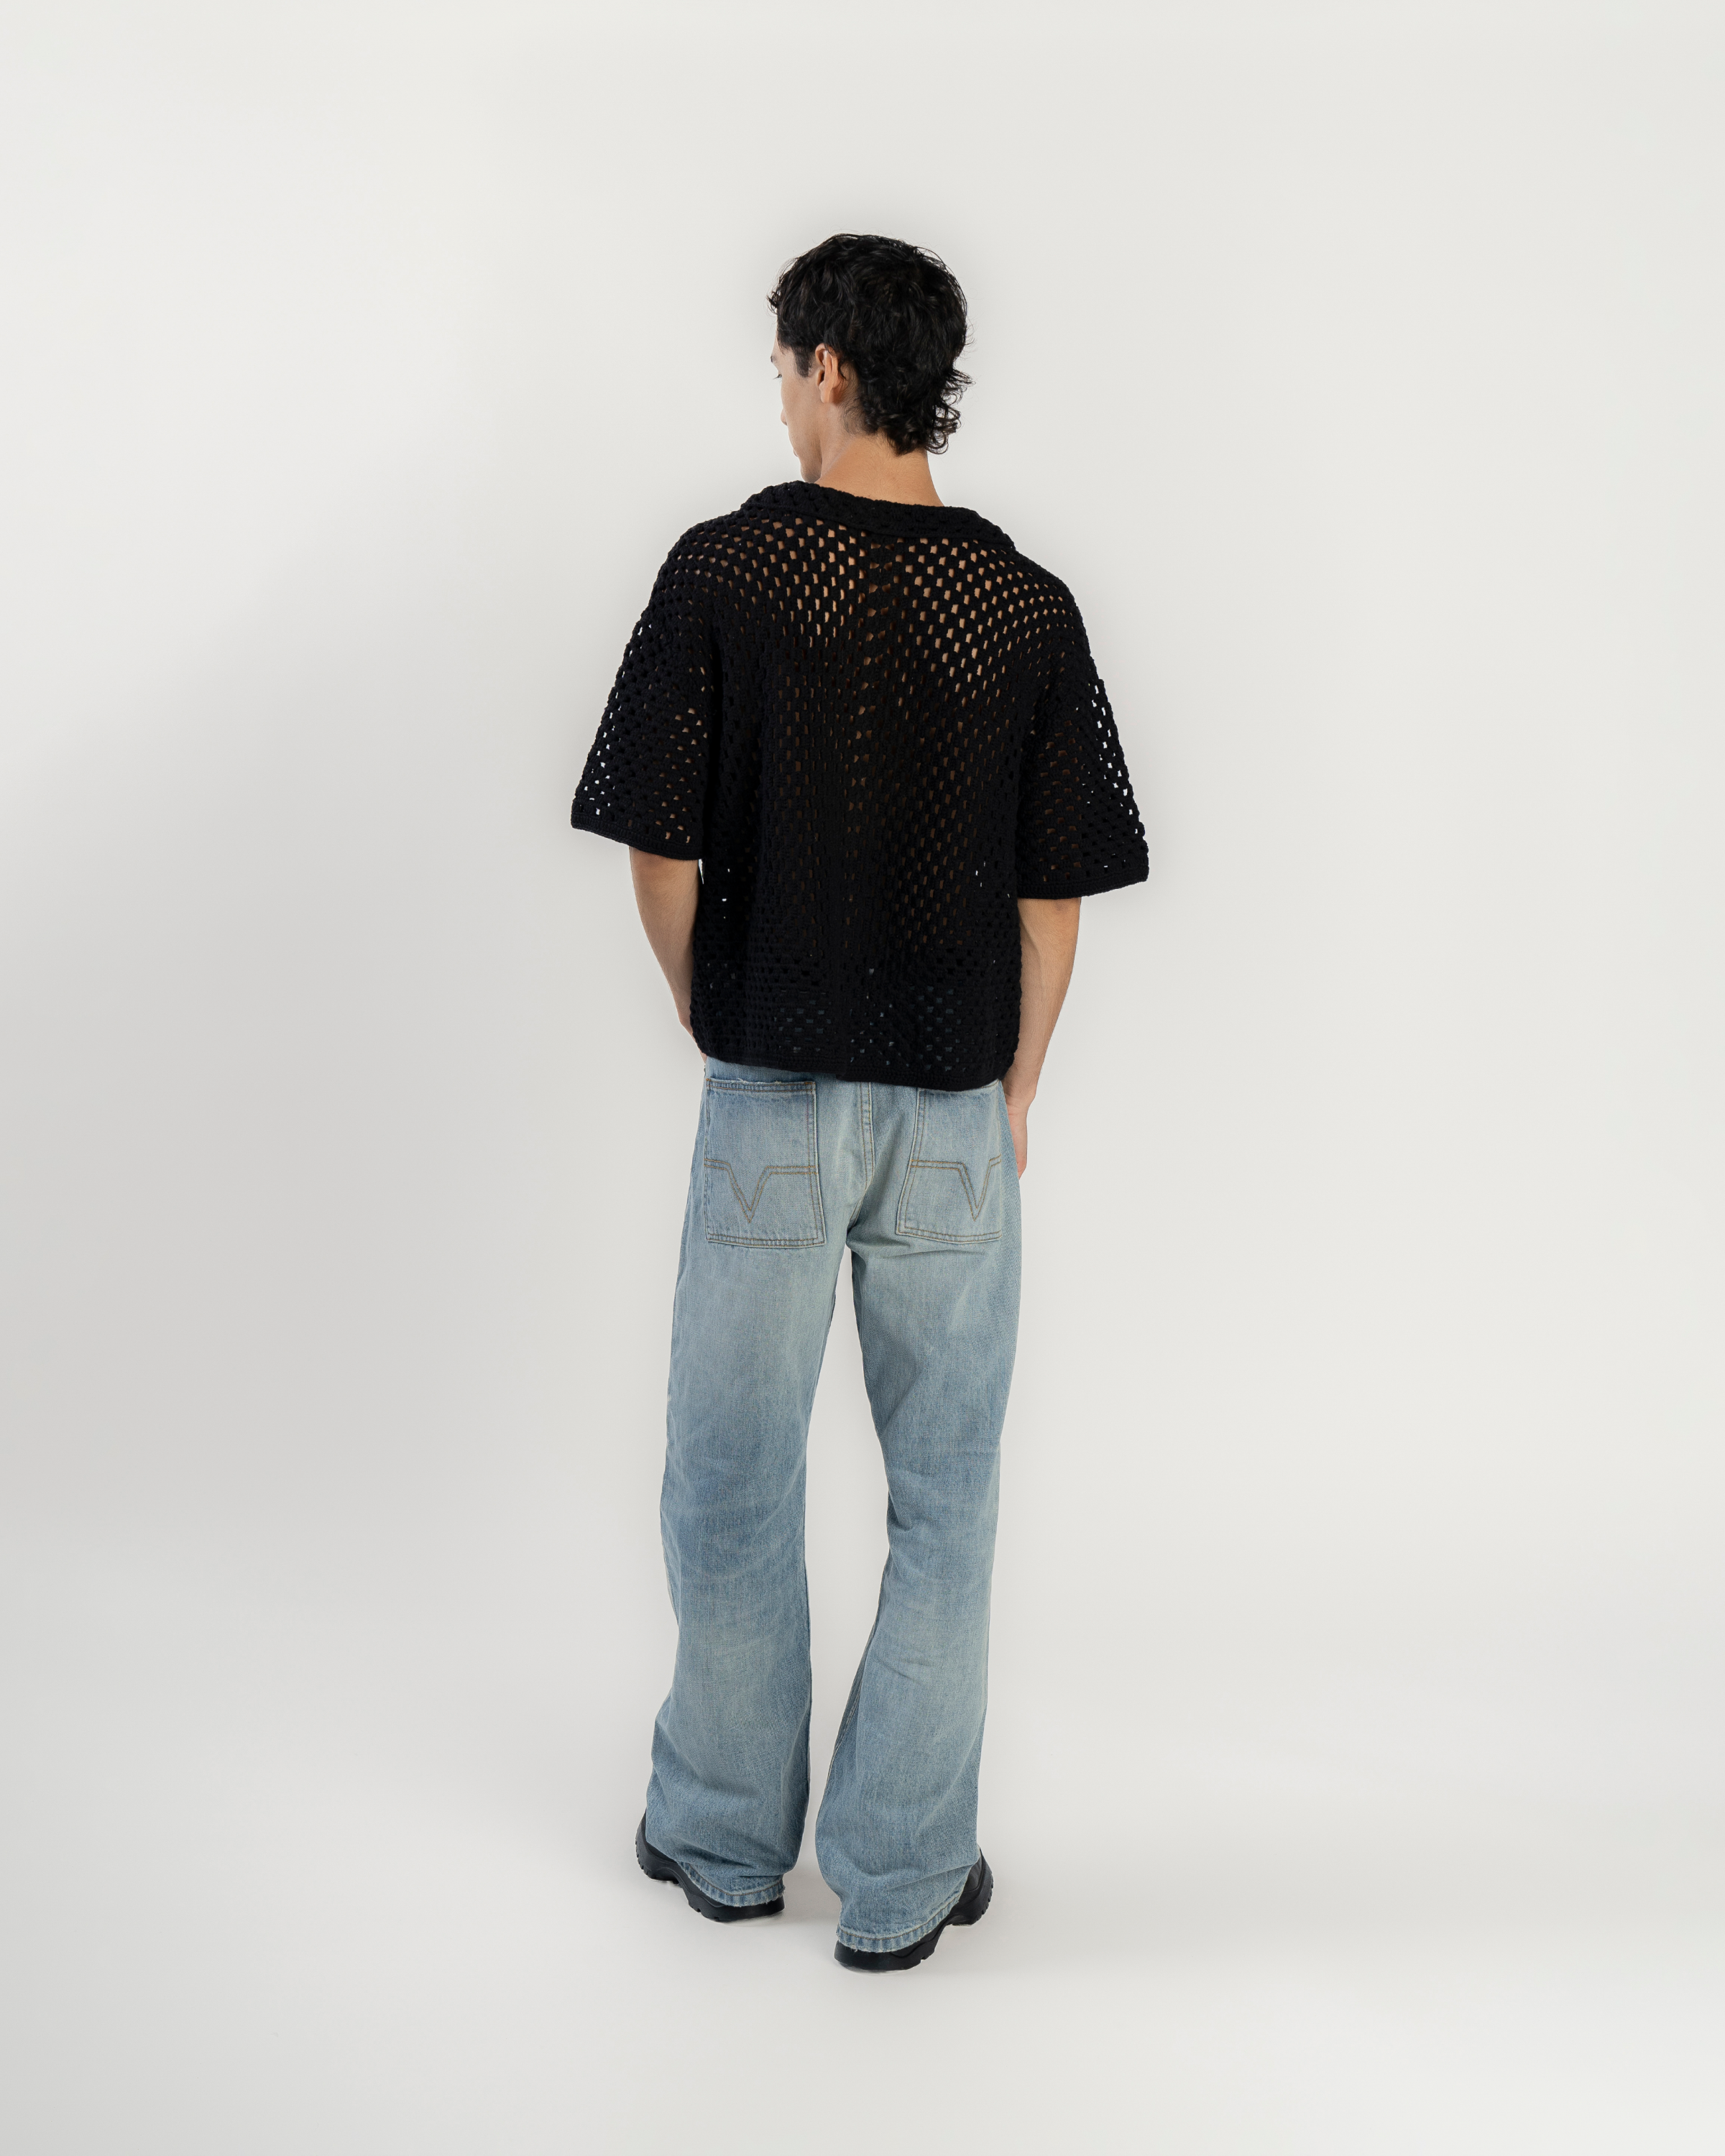 Black Crochet Shirt